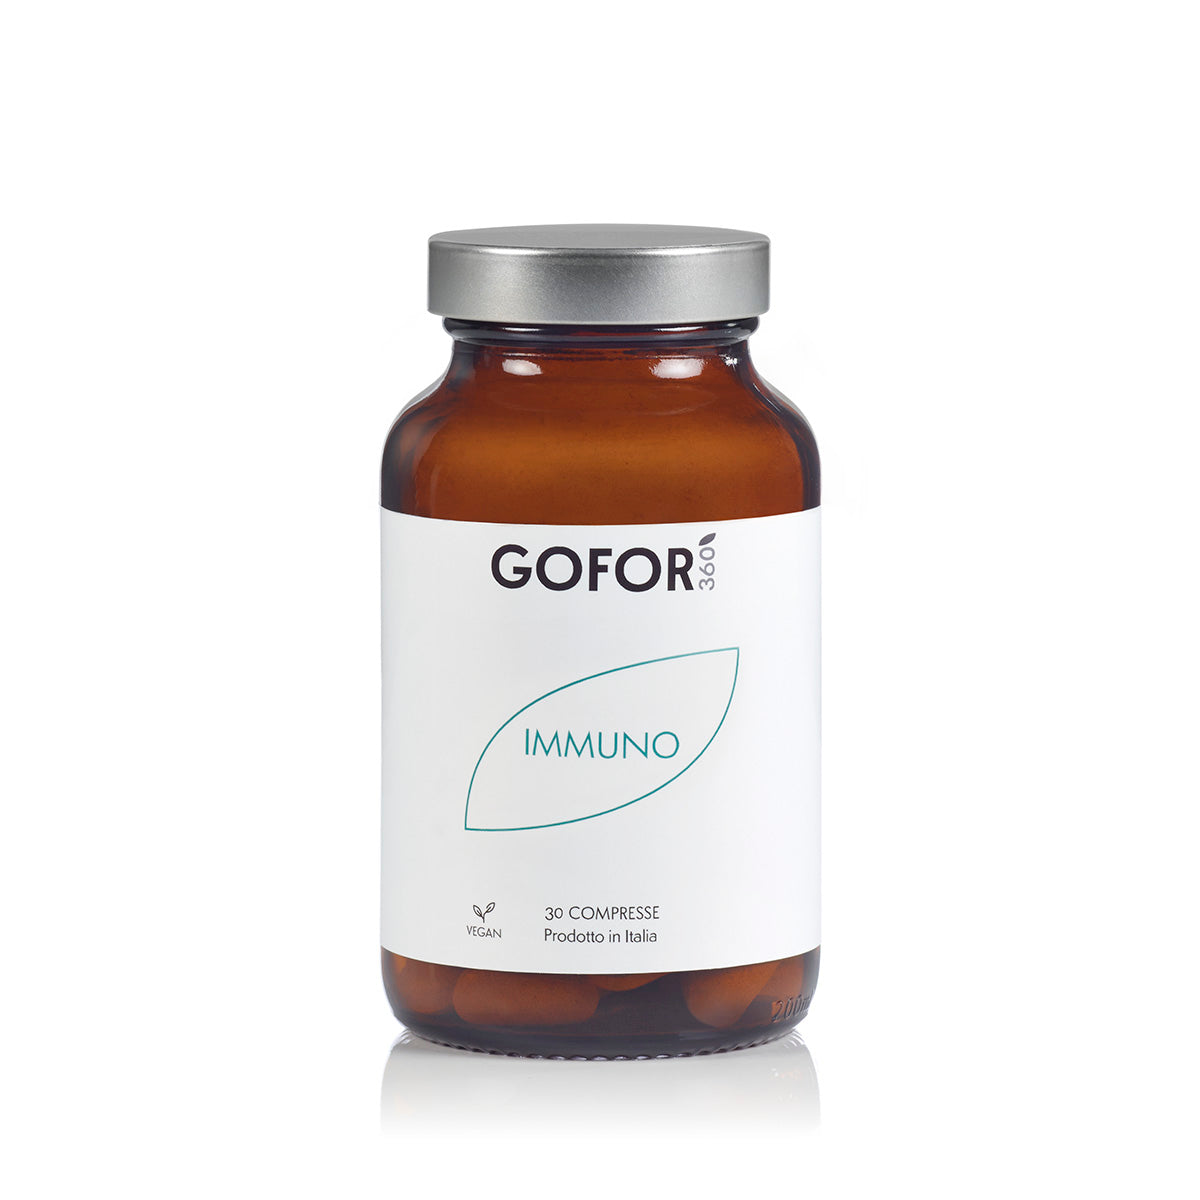 GOFOR360 - Immuno